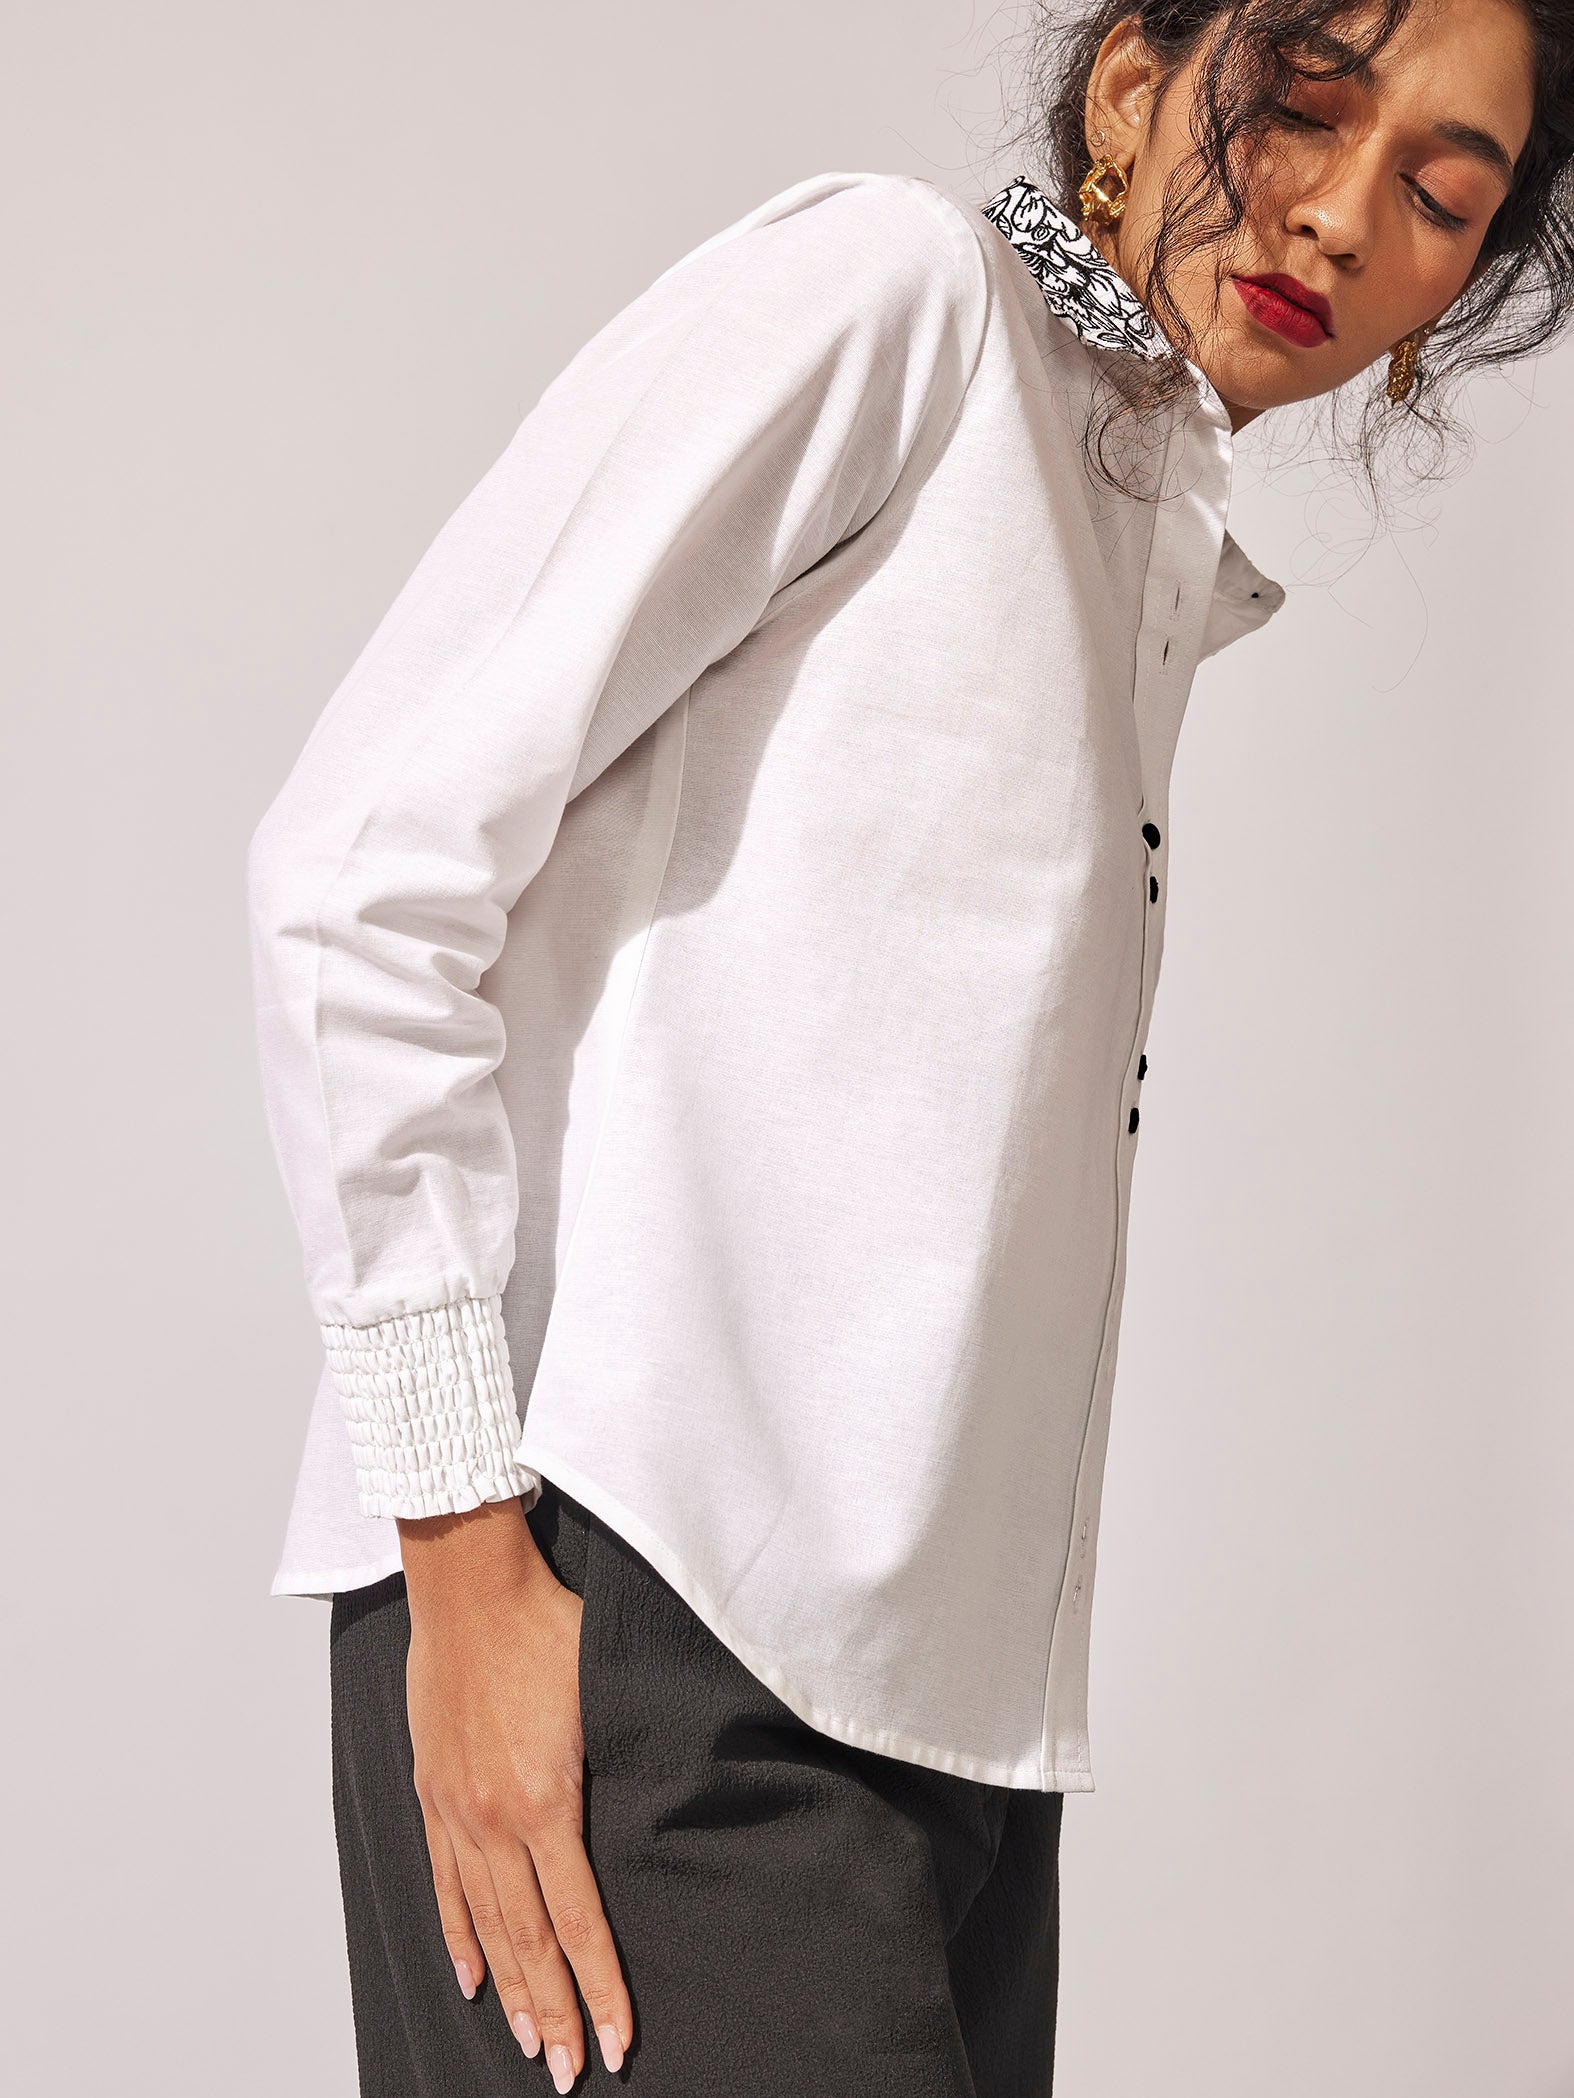 Monochrome Embroidered Collar Shirt